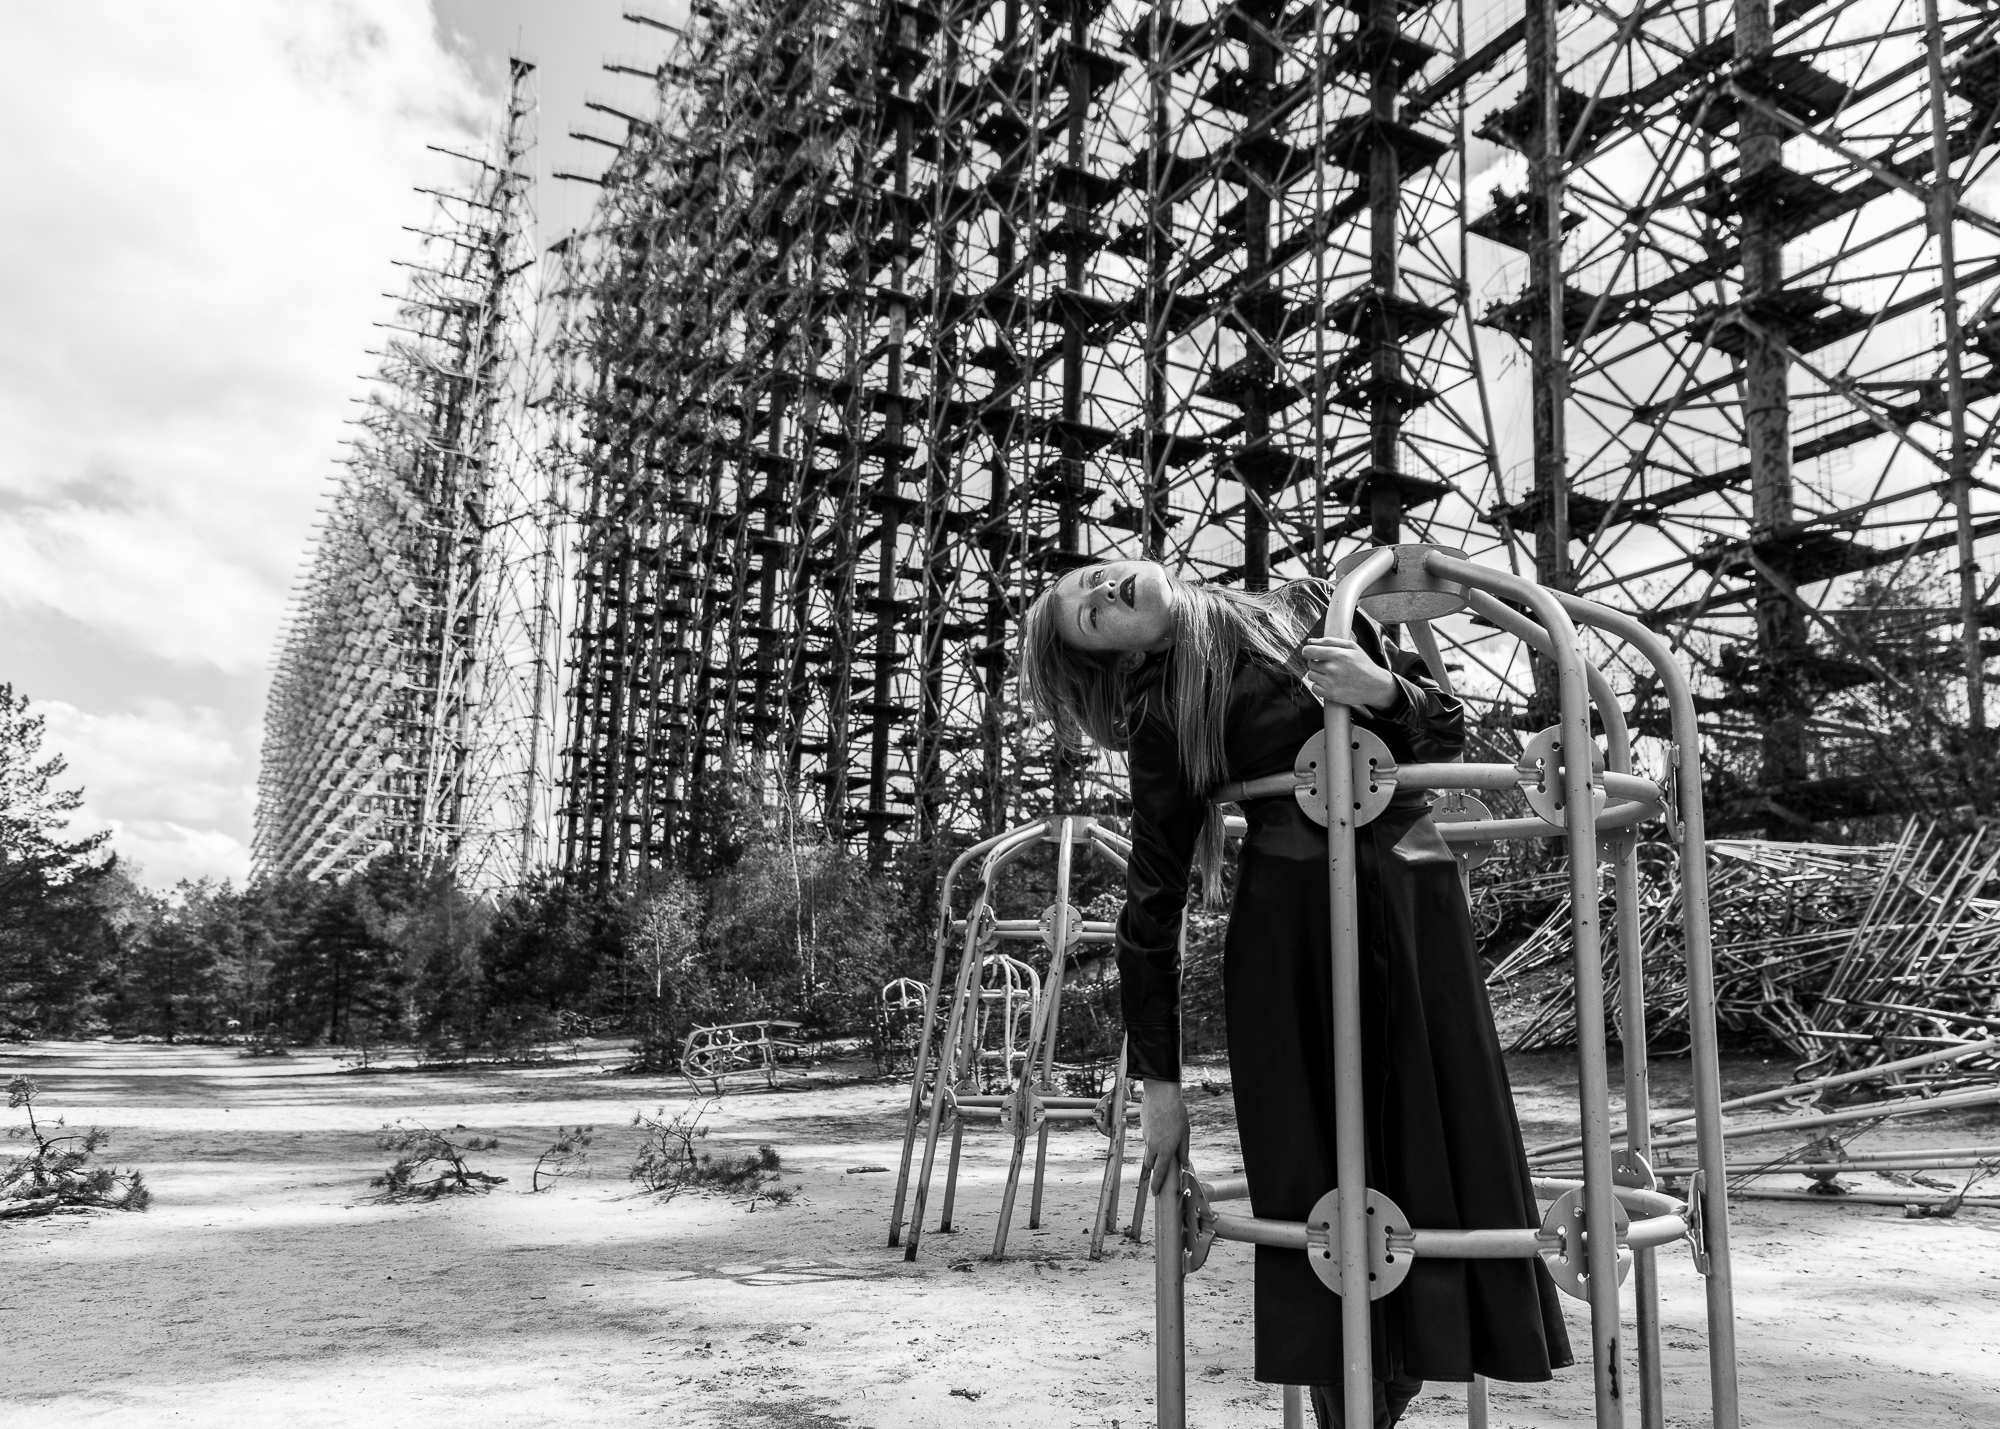 chernobyl, fine art photography, photoart, photoart for sale, monochrome photo art, duga radar